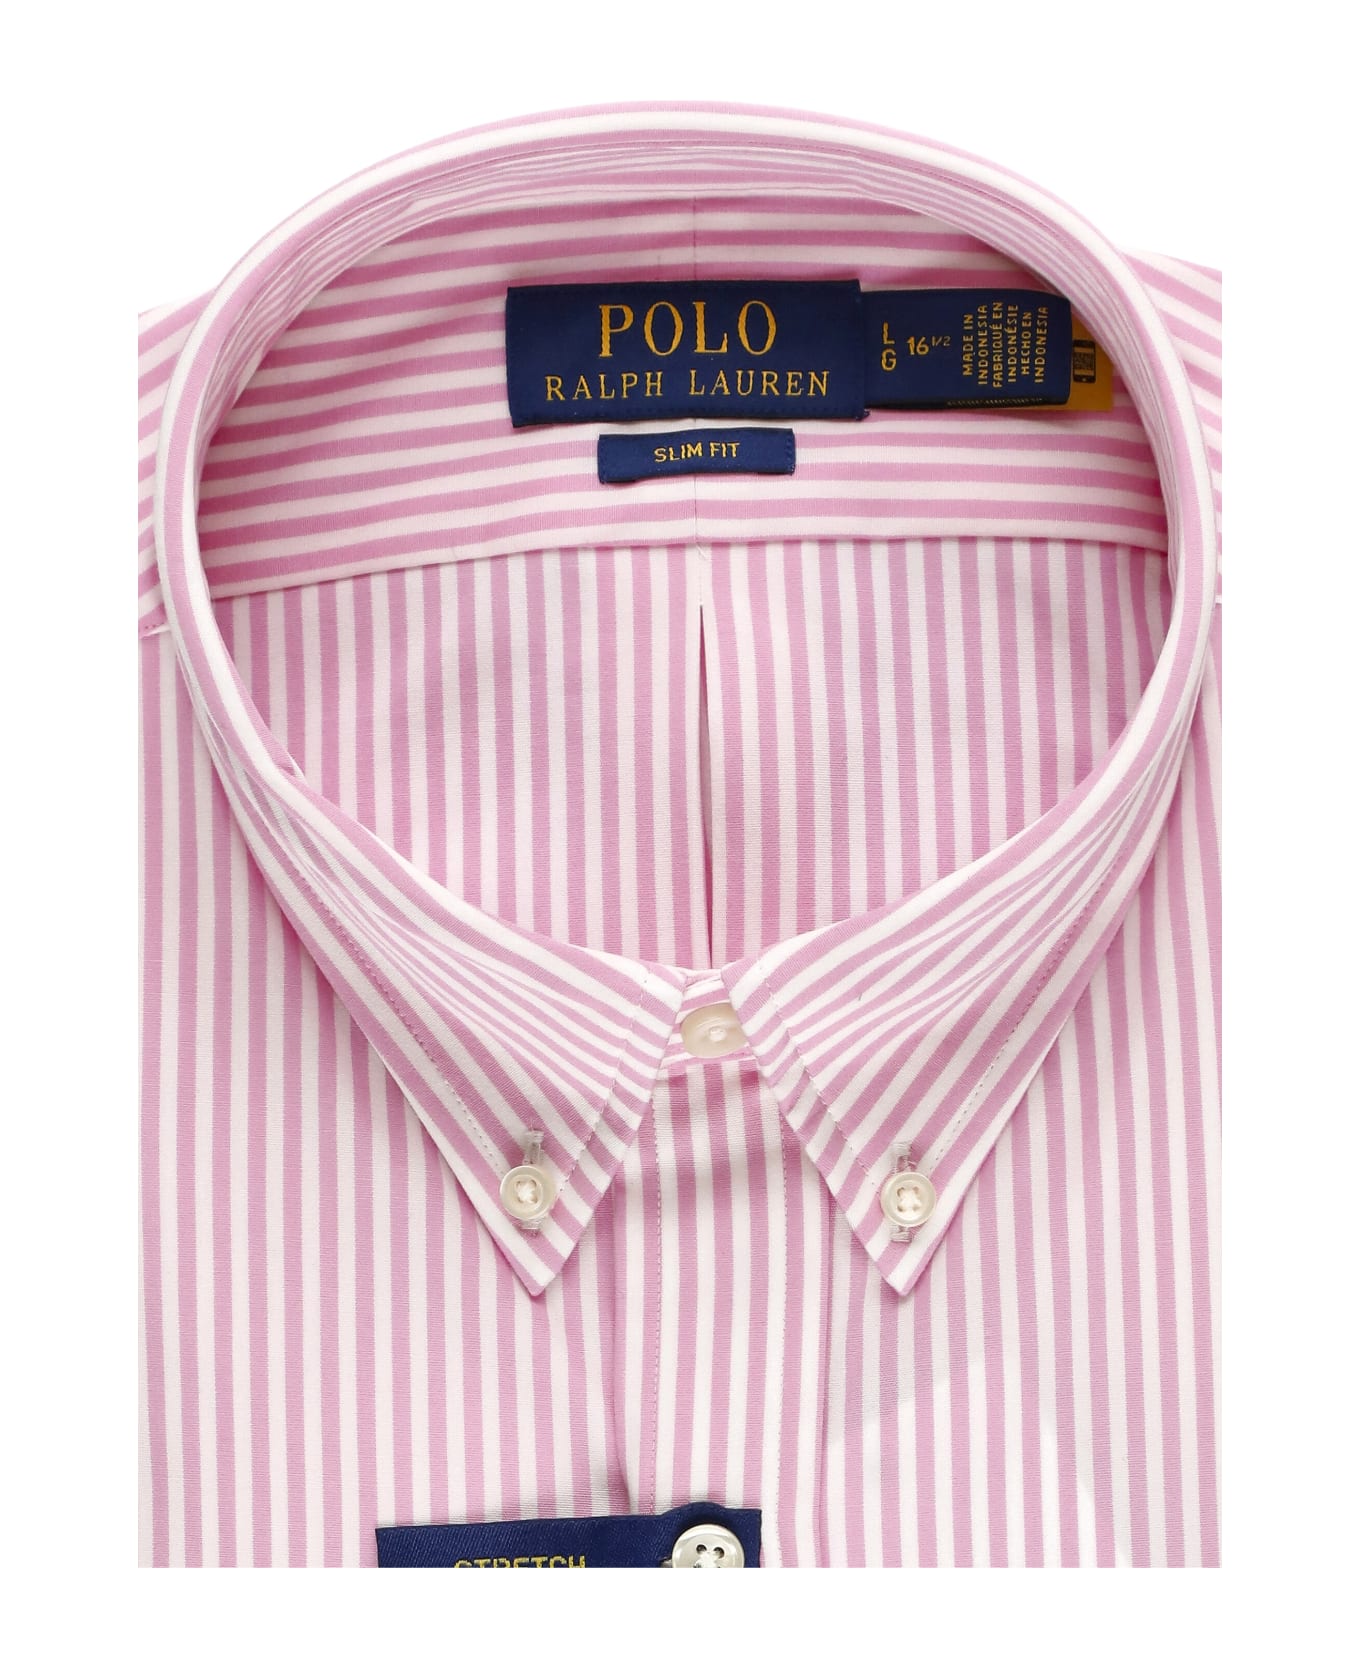 Polo Ralph Lauren Pony Shirt